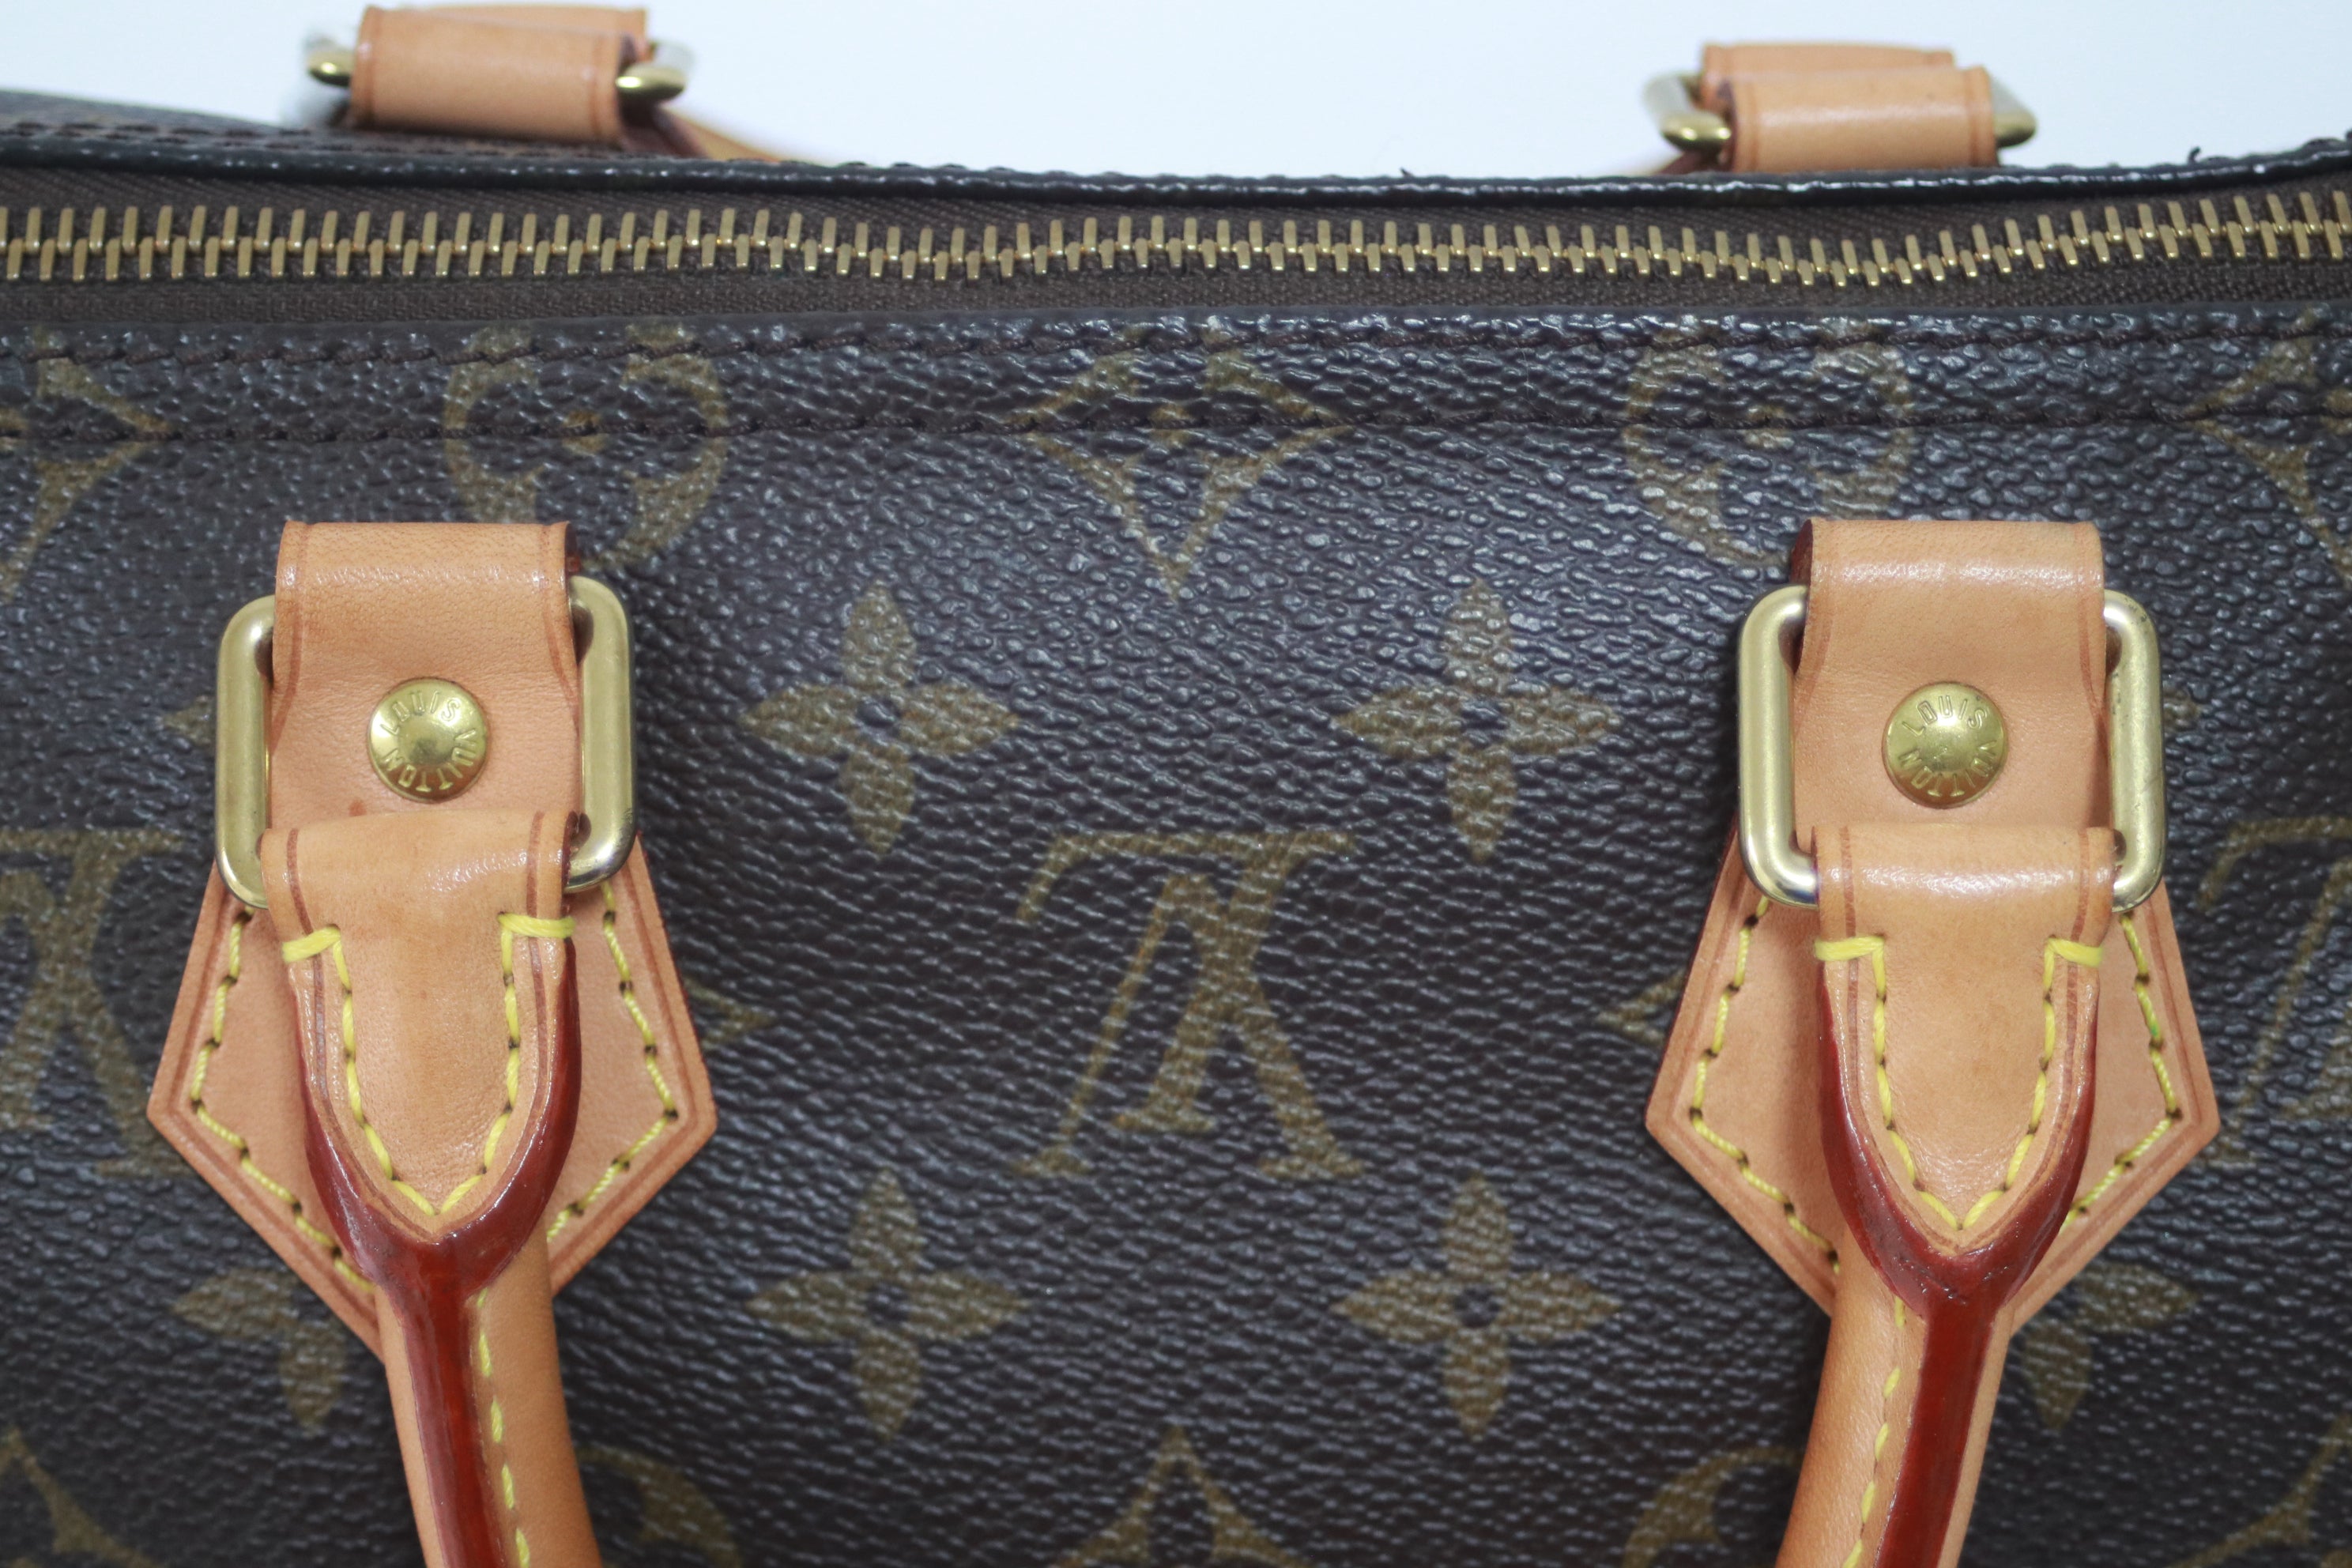 Louis Vuitton Speedy 25 Handbag Used (6083)